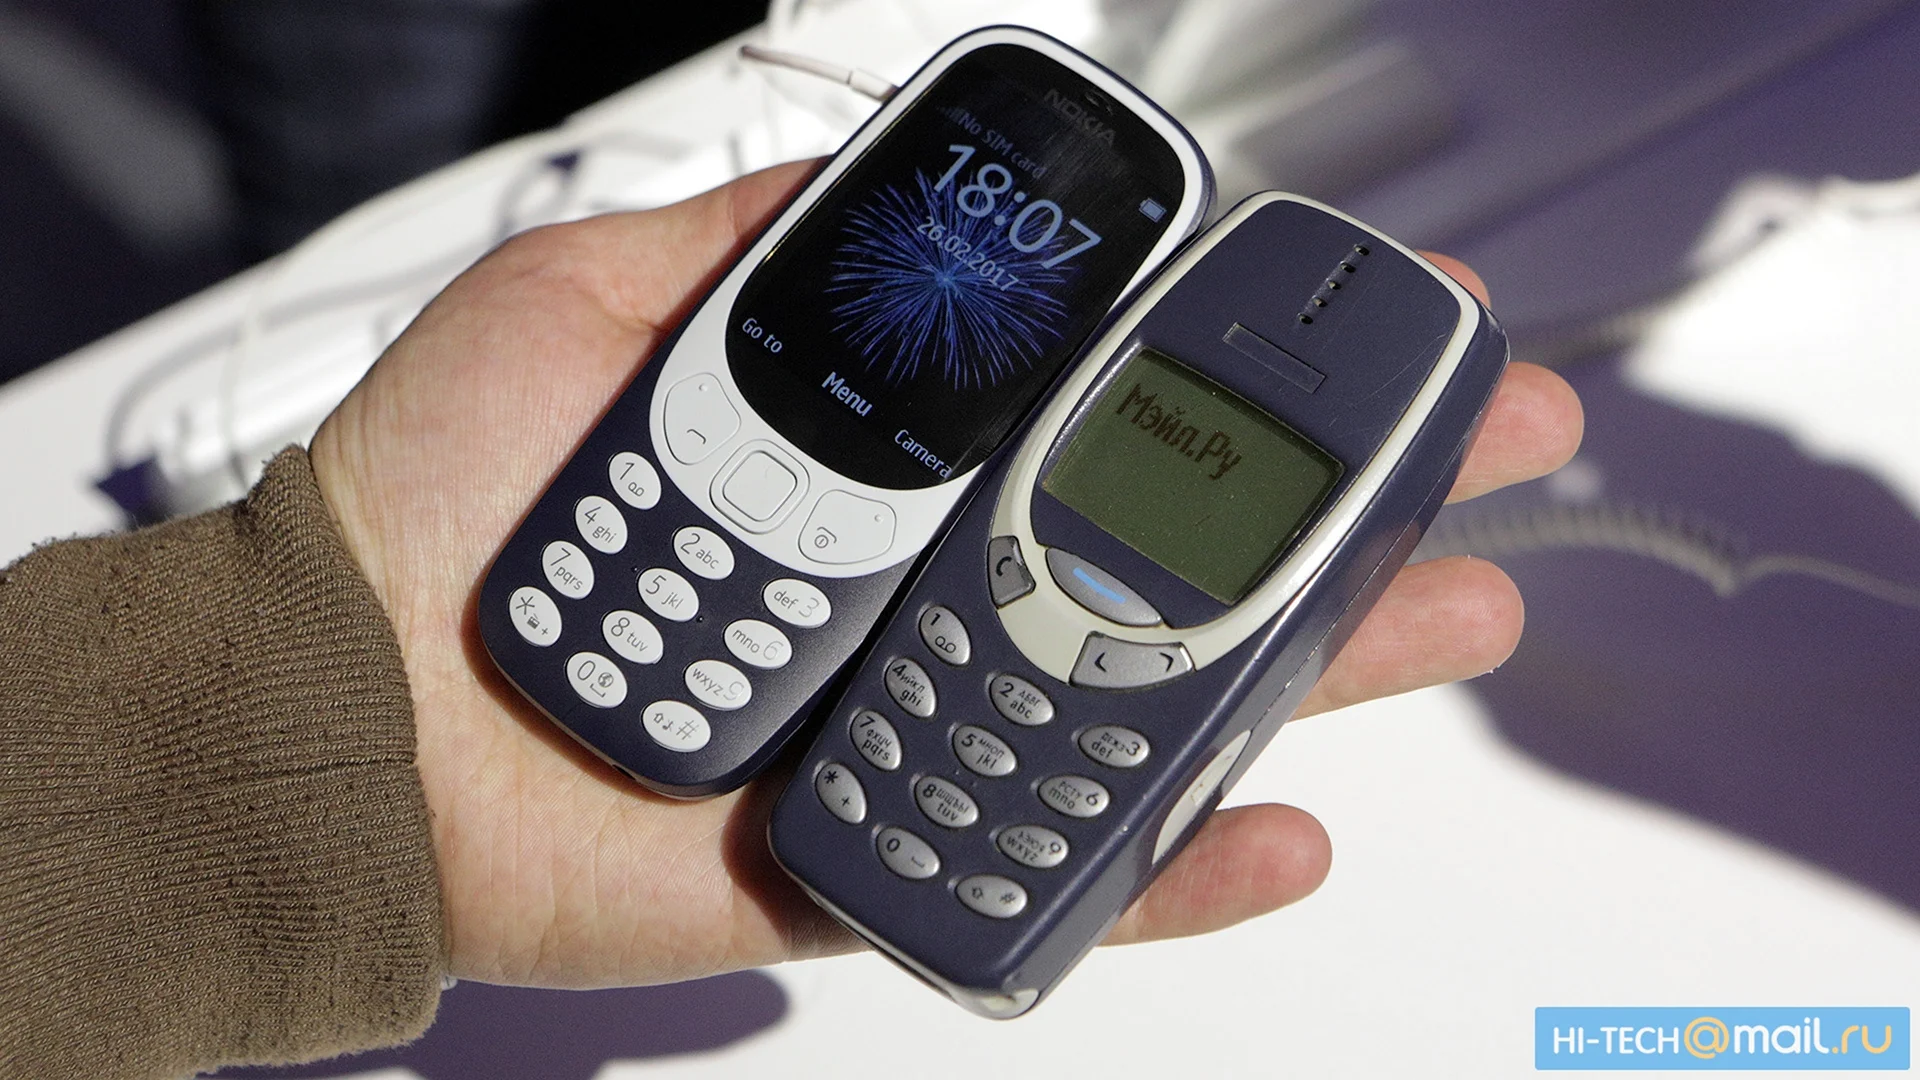 Nokia 3310 New